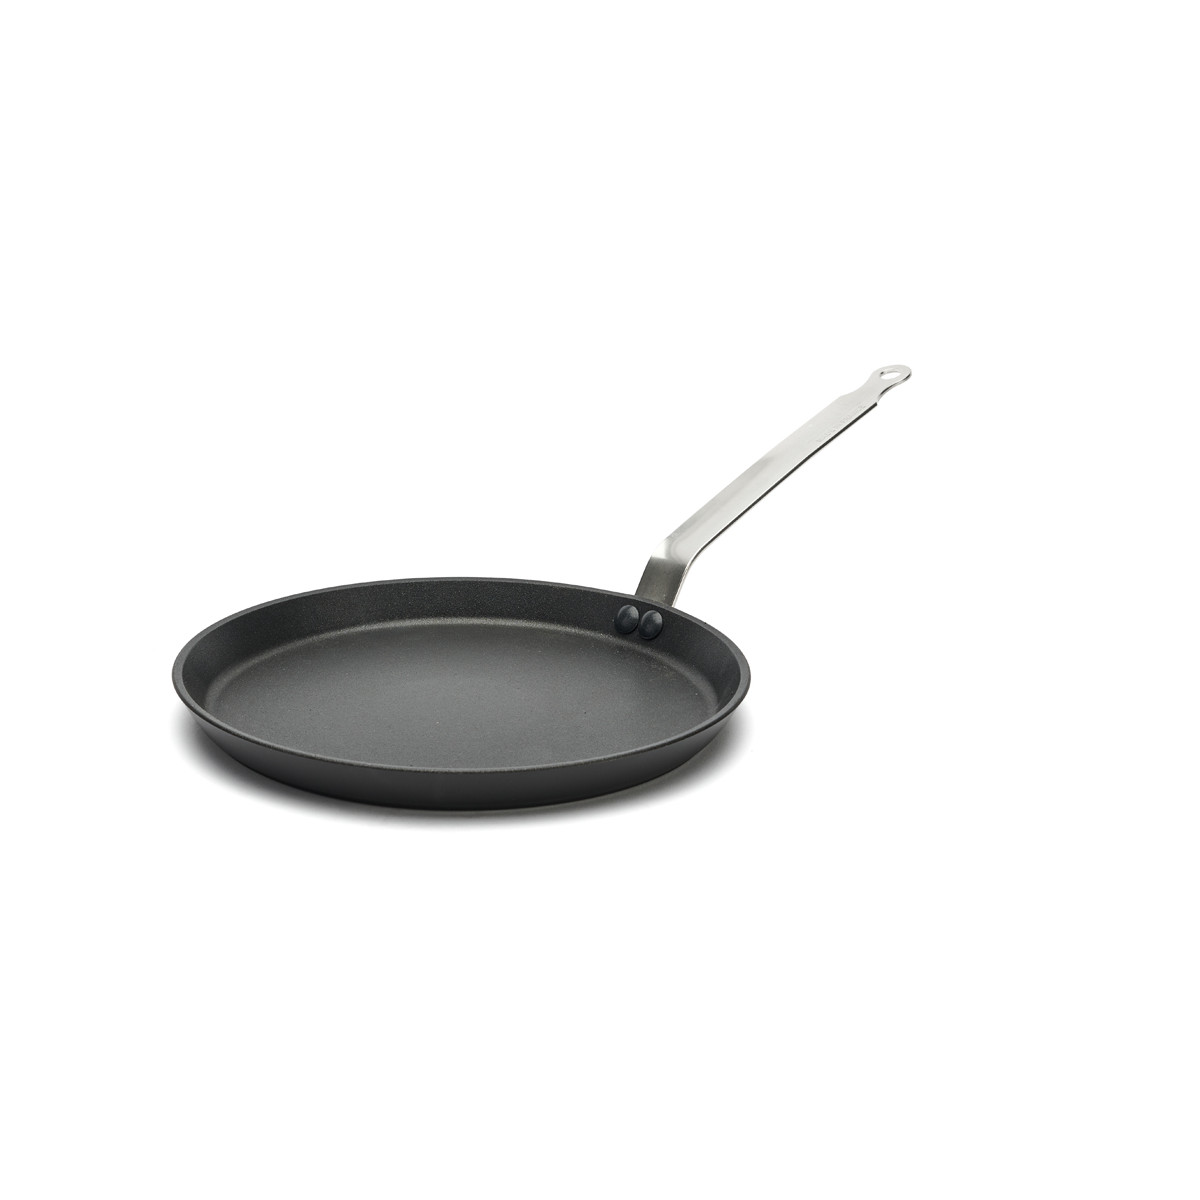 de Buyer Choc Non-Stick Crepe Pan